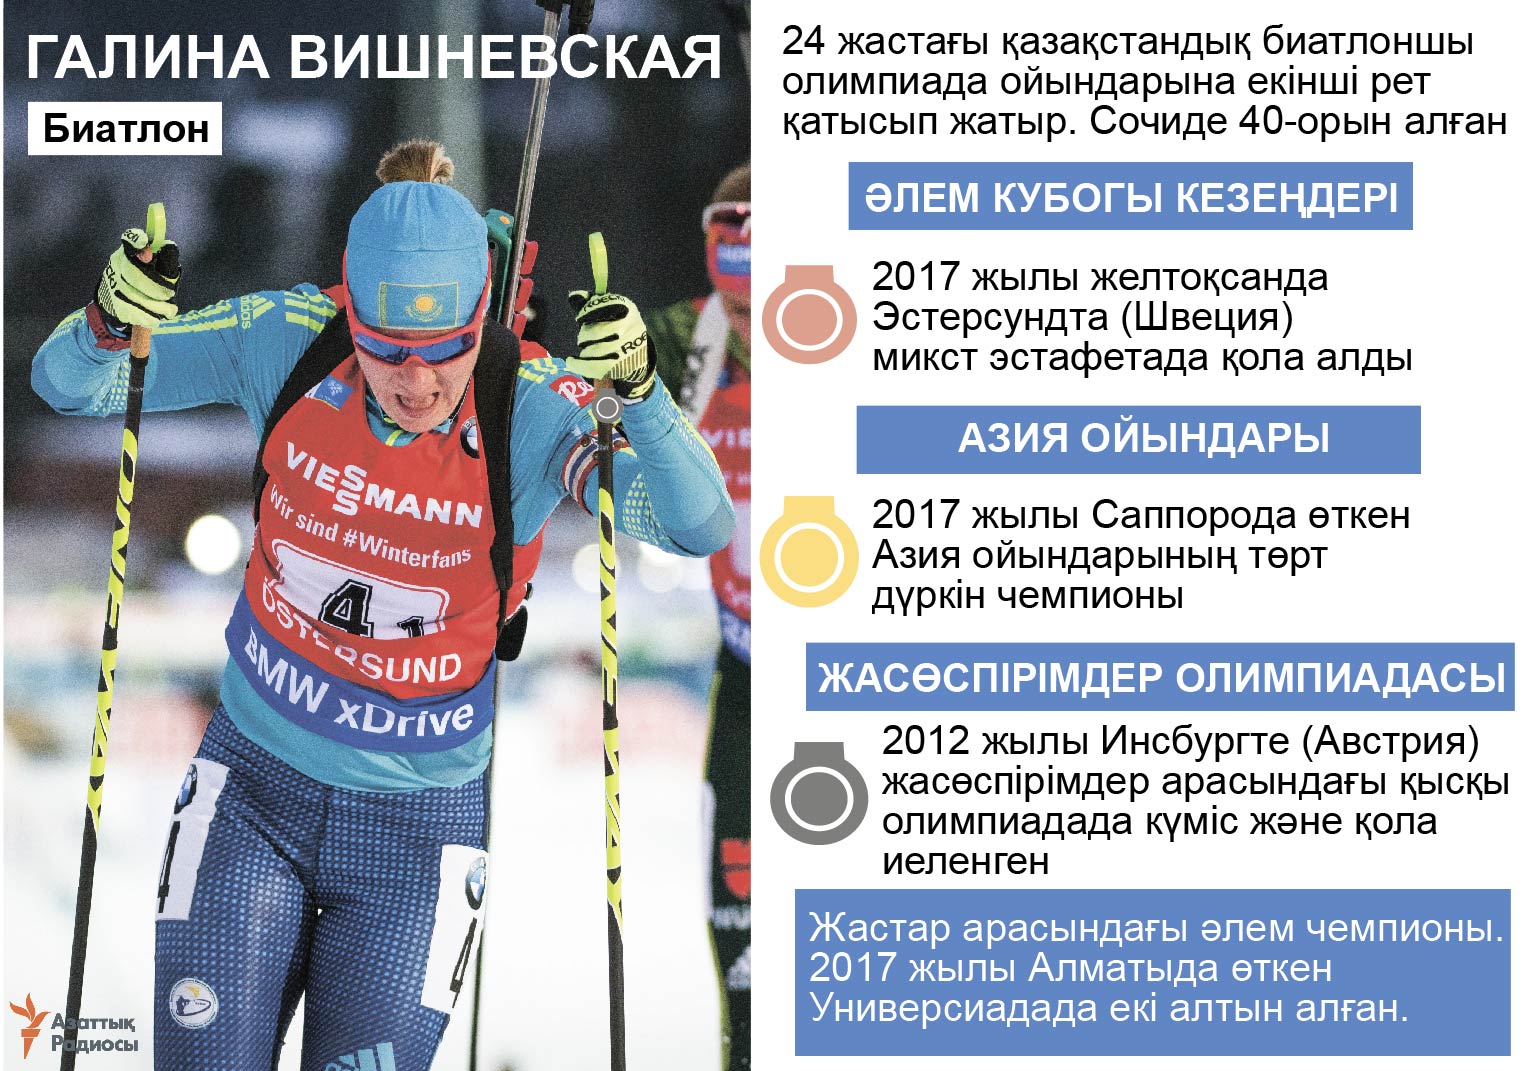 infographic about Galina Vishnevskaya